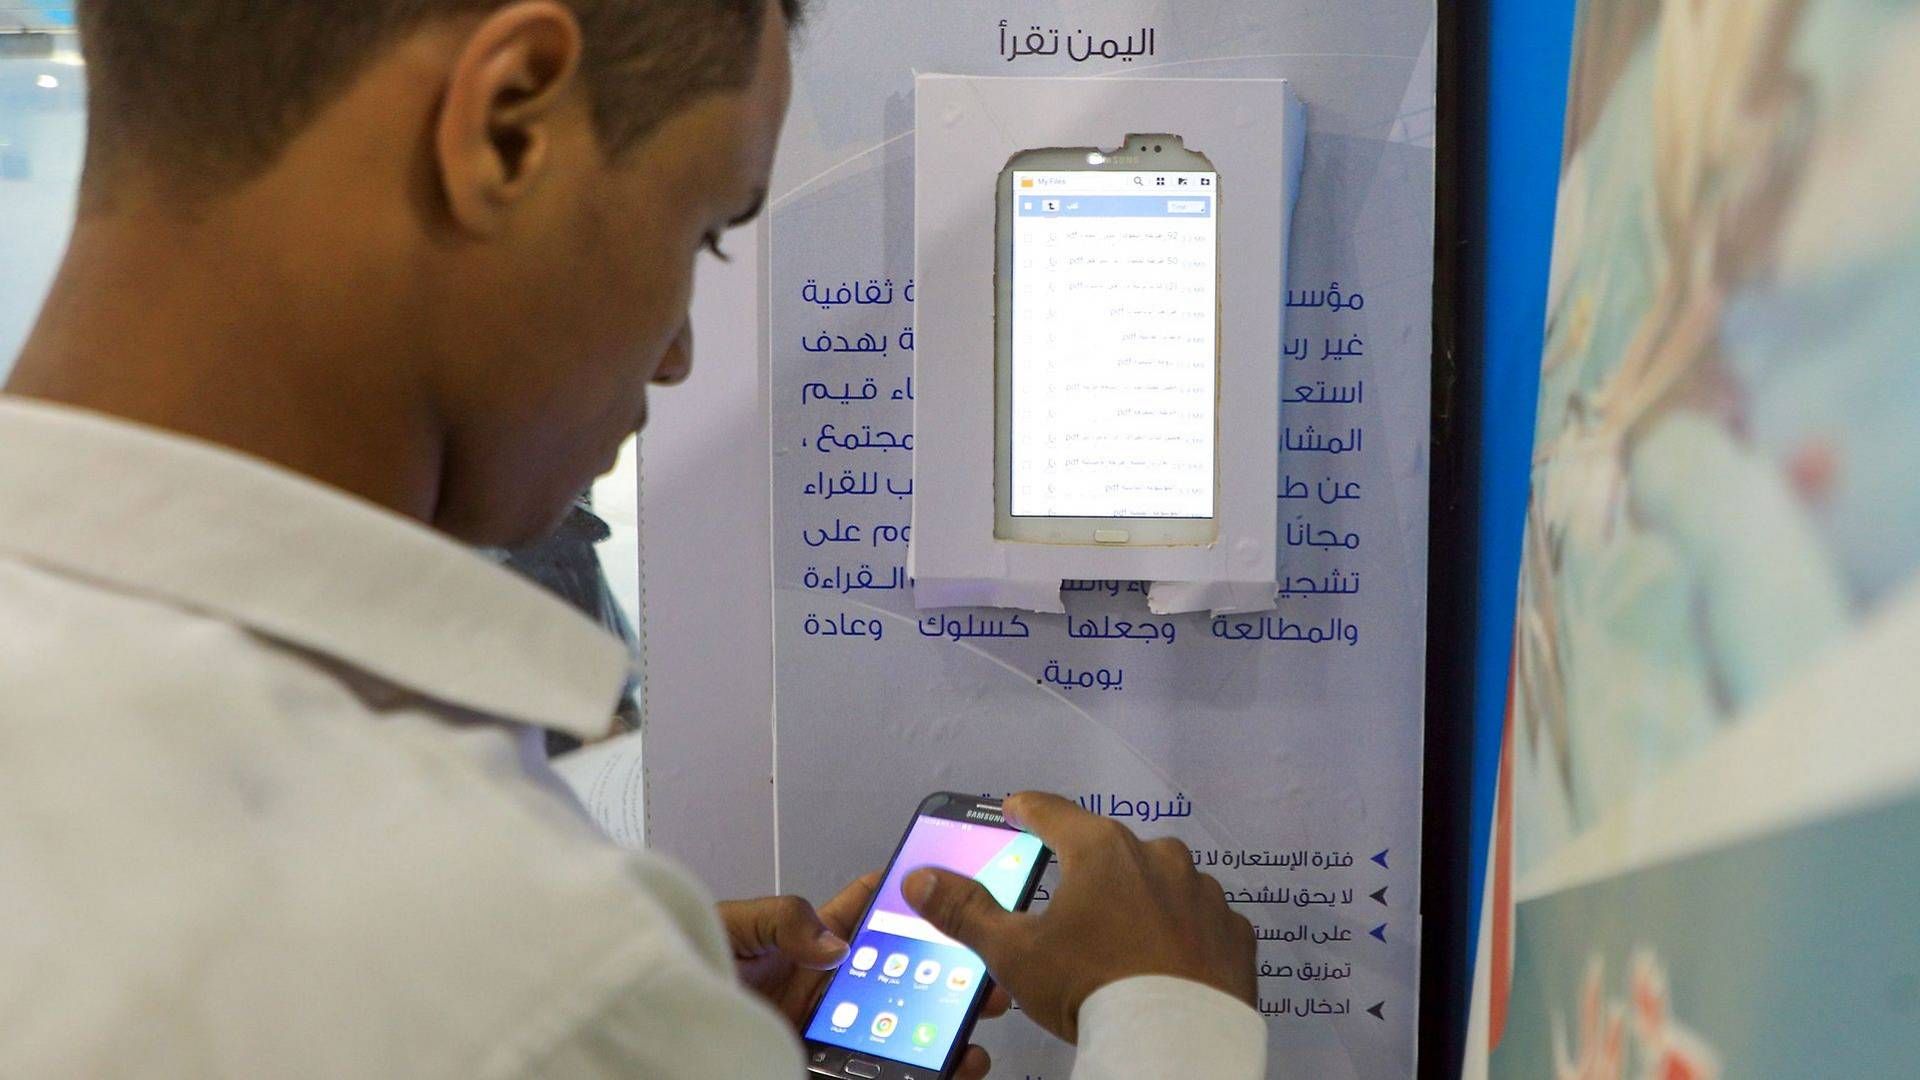 Investeringsplatformen Public.com fungerer via en app på miobiltelefonen. | Foto: Mohammed Huwais/AFP/Ritzau Scanpix